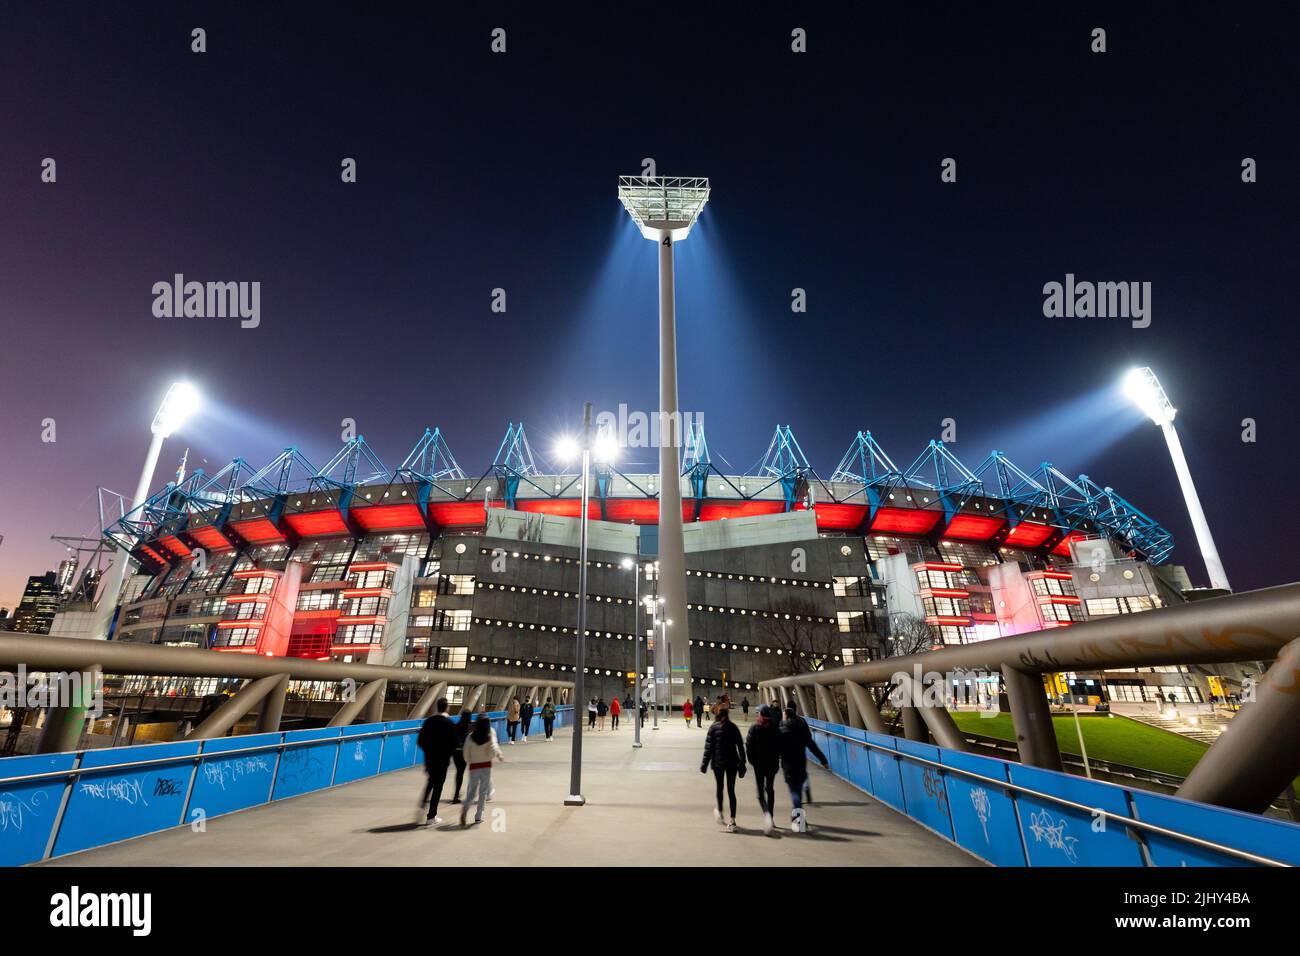 Melbourne Cricket Ground at Night in Australia Stock Photo